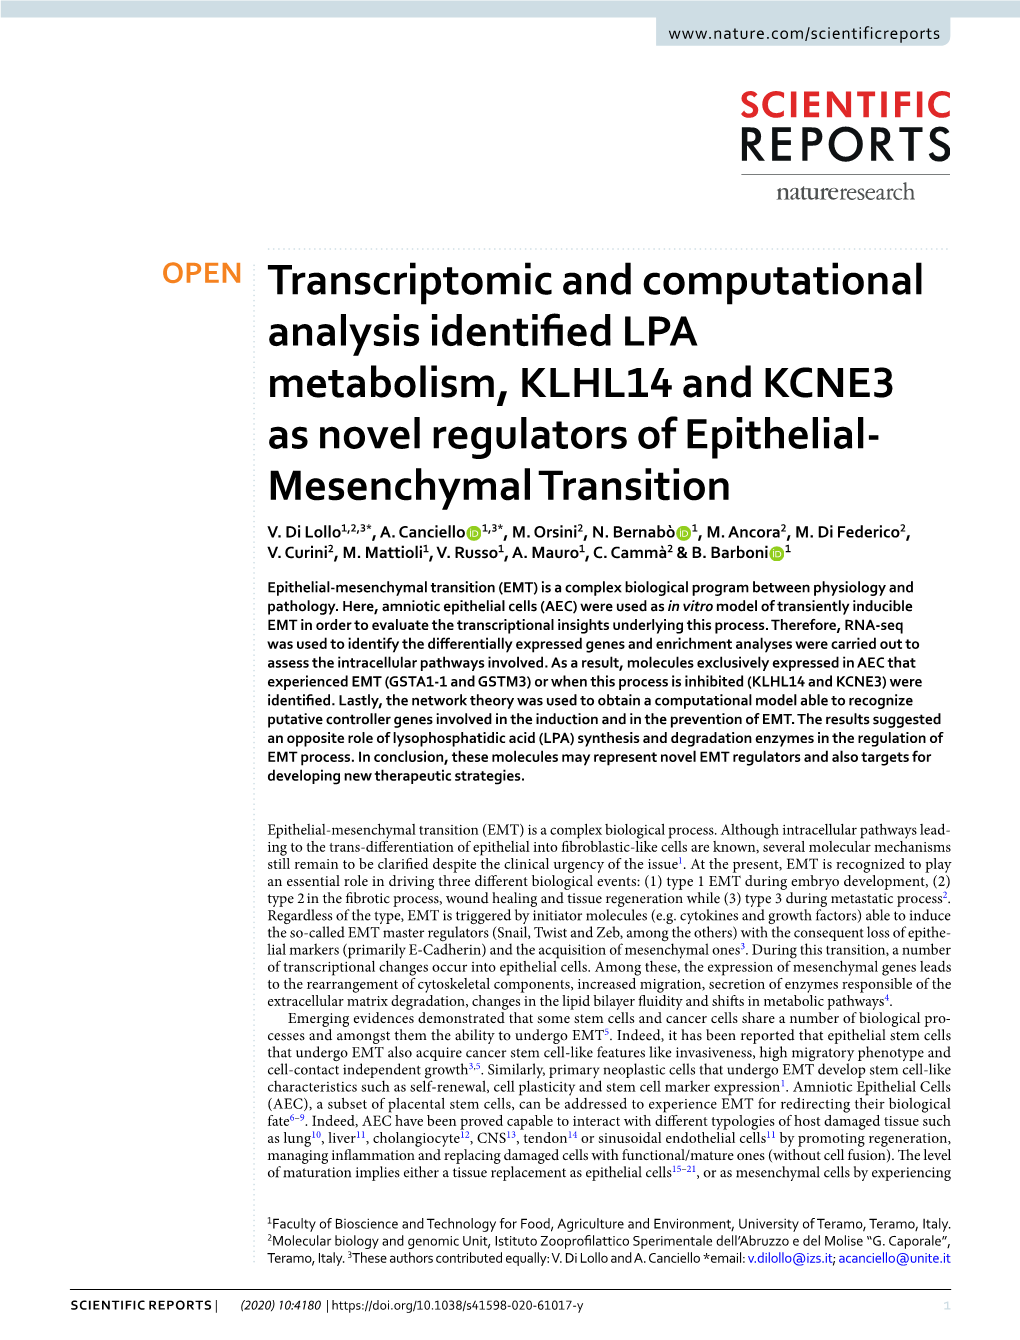 Transcriptomic and Computational Analysis Identified LPA Metabolism